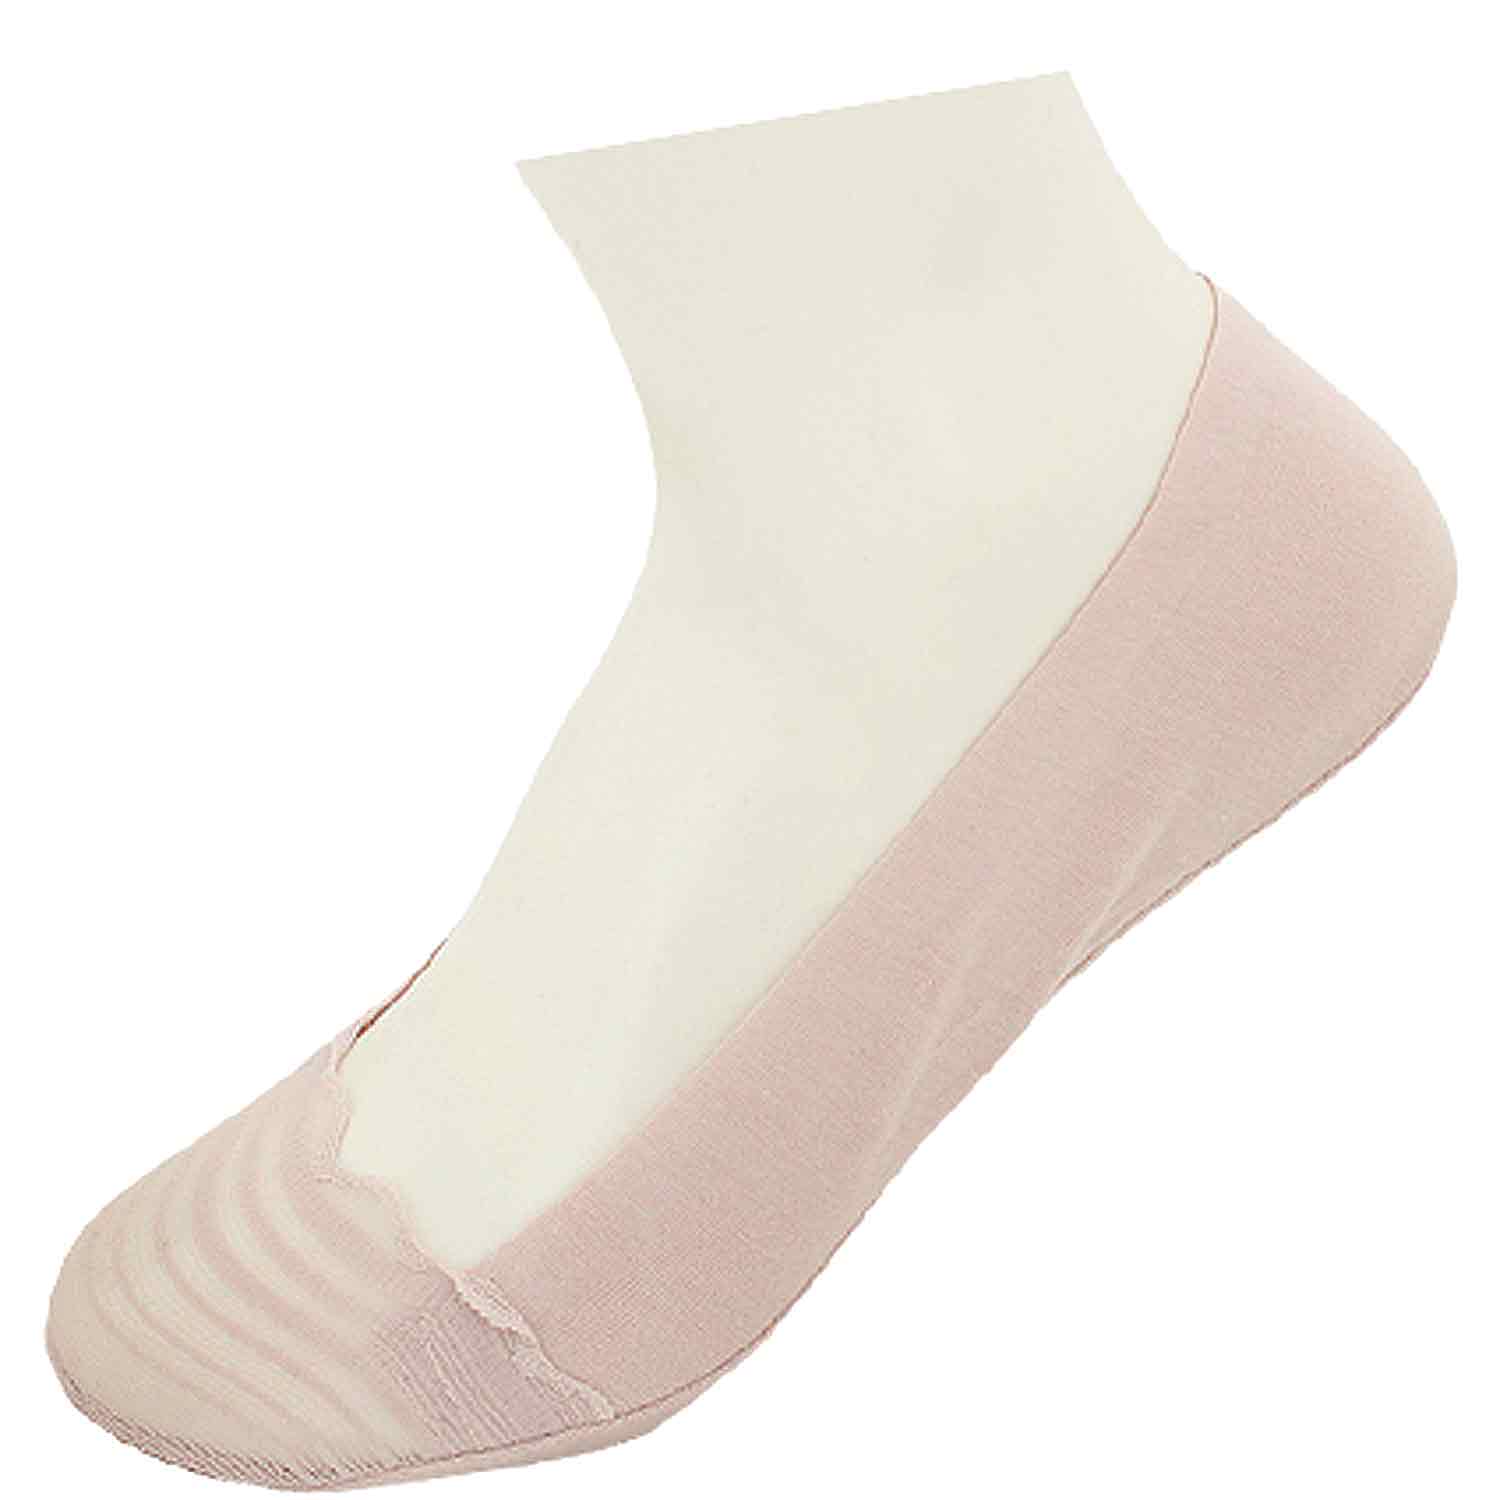 The Skandinavian Brand 5er Pack Ballerina Socken mit Spitze Gr. 36-41 old pink